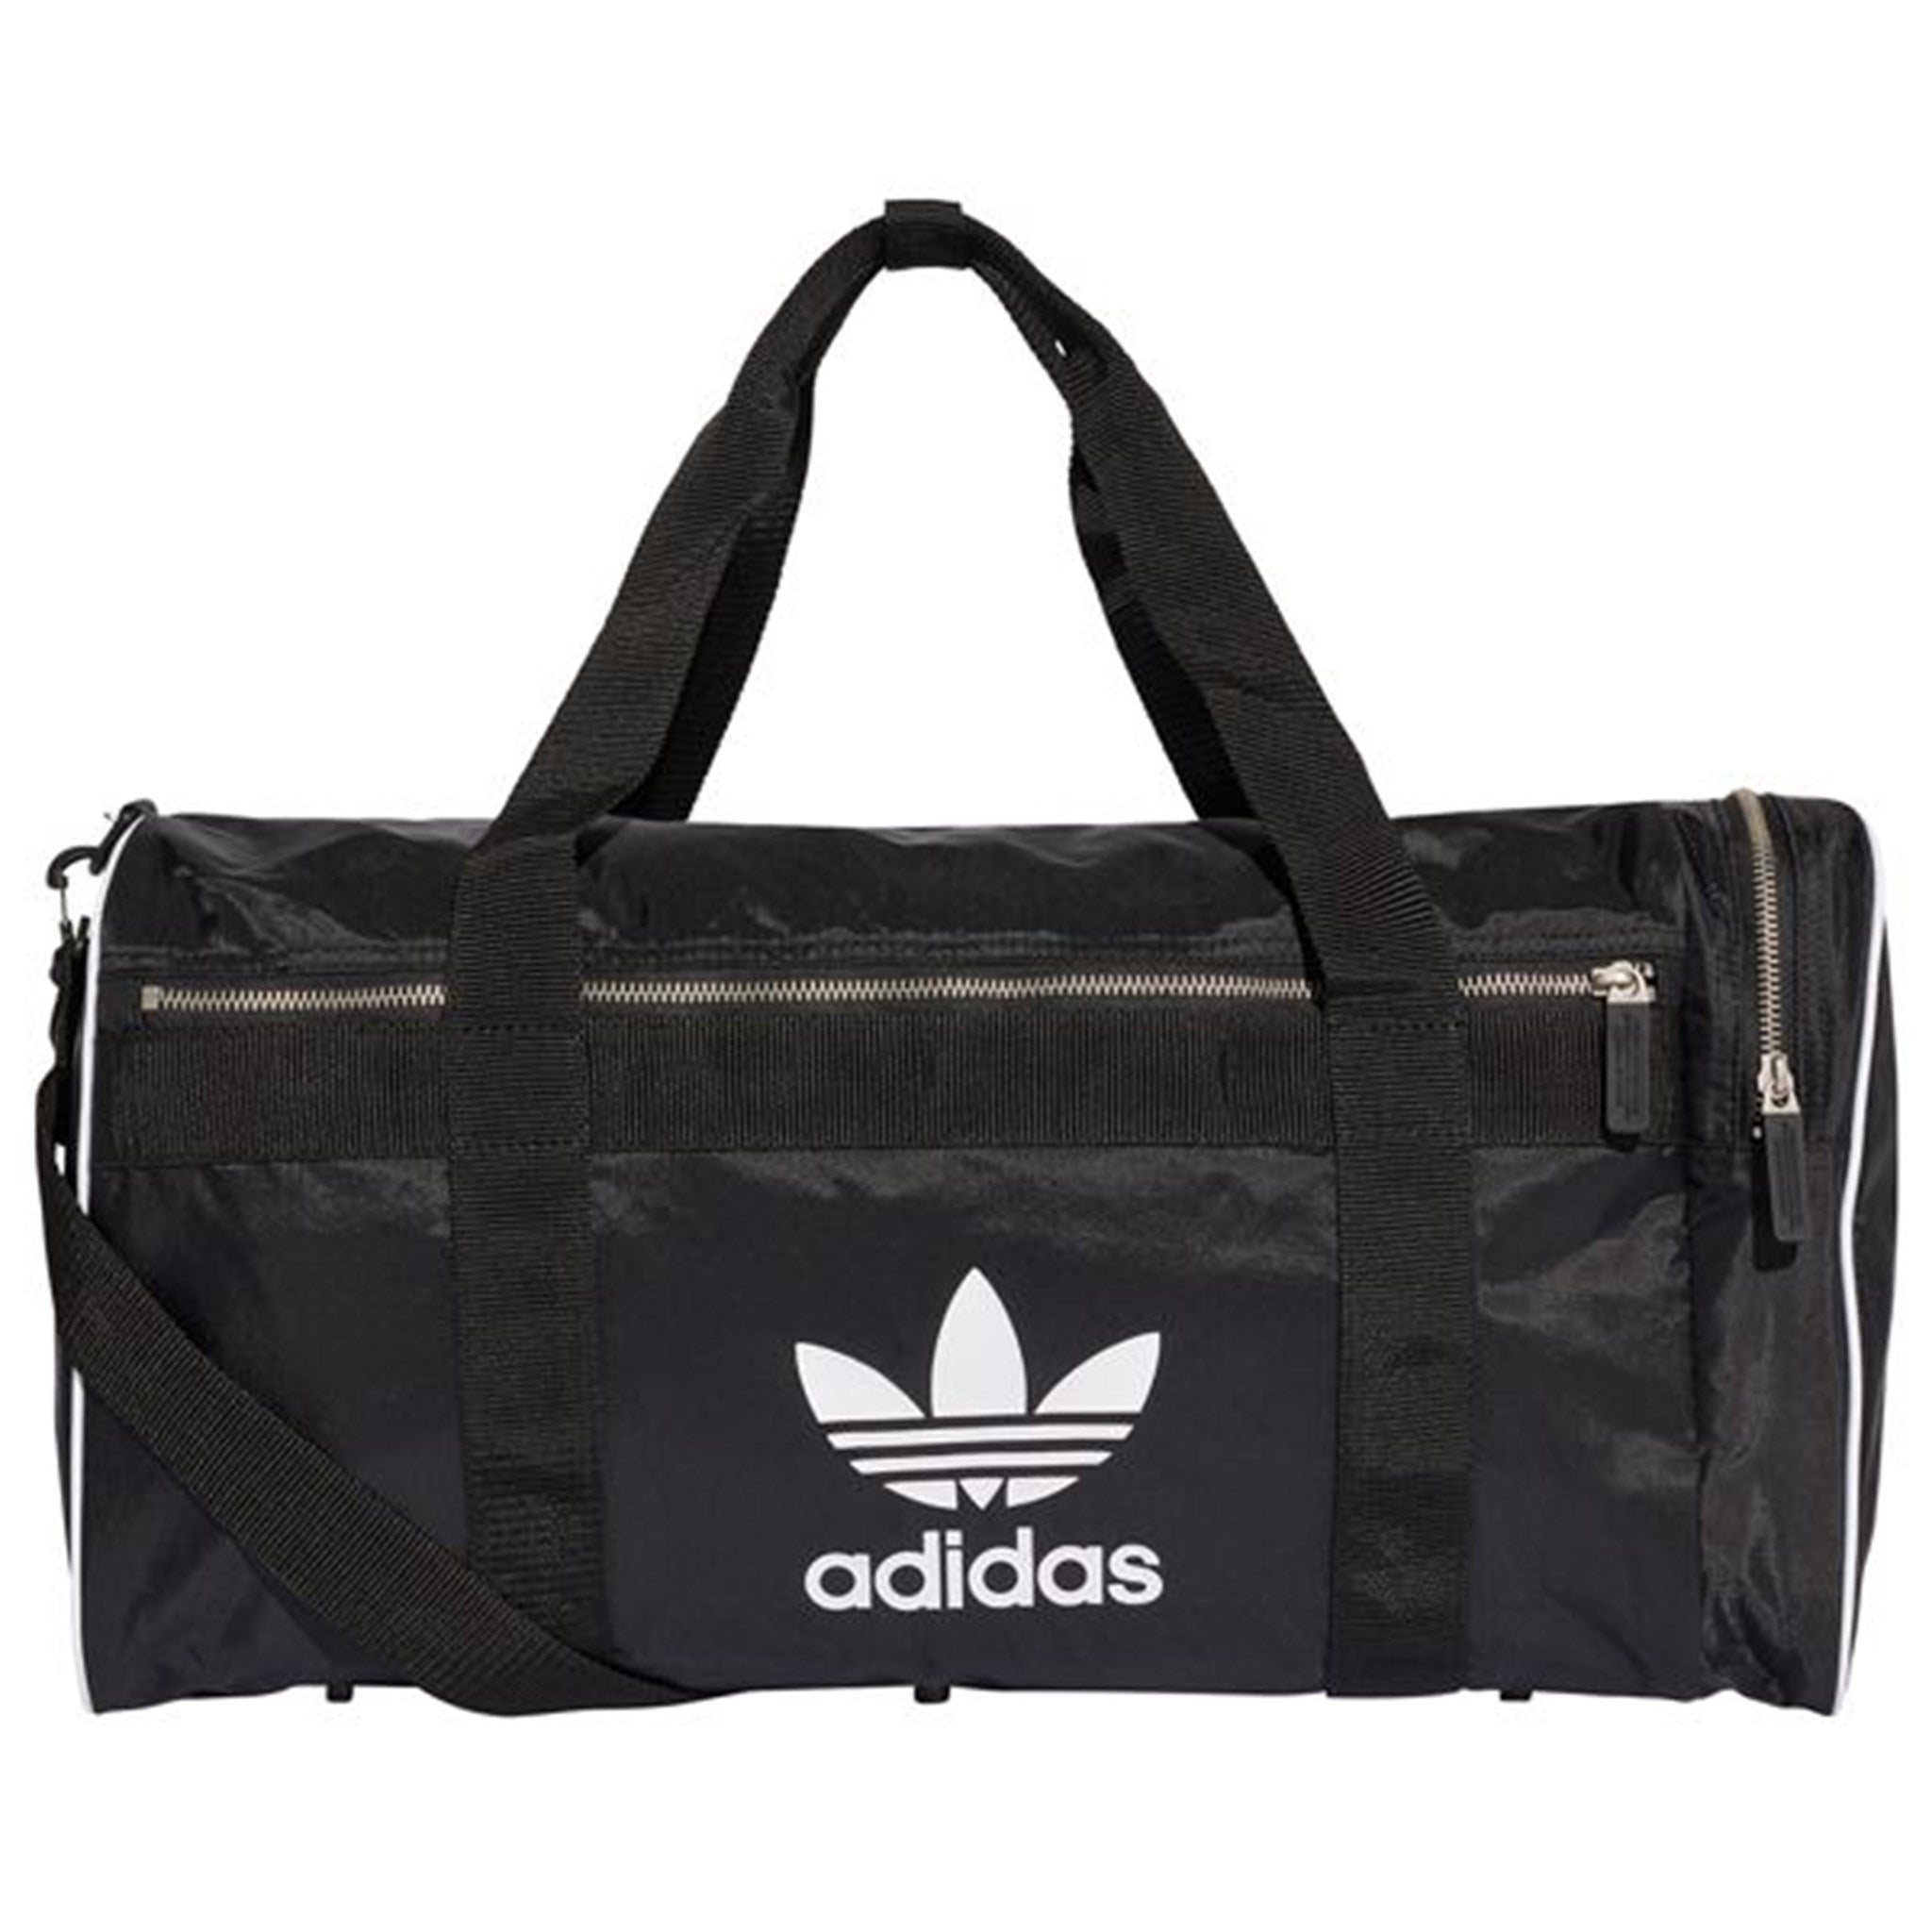 adidas Sport Bag Black